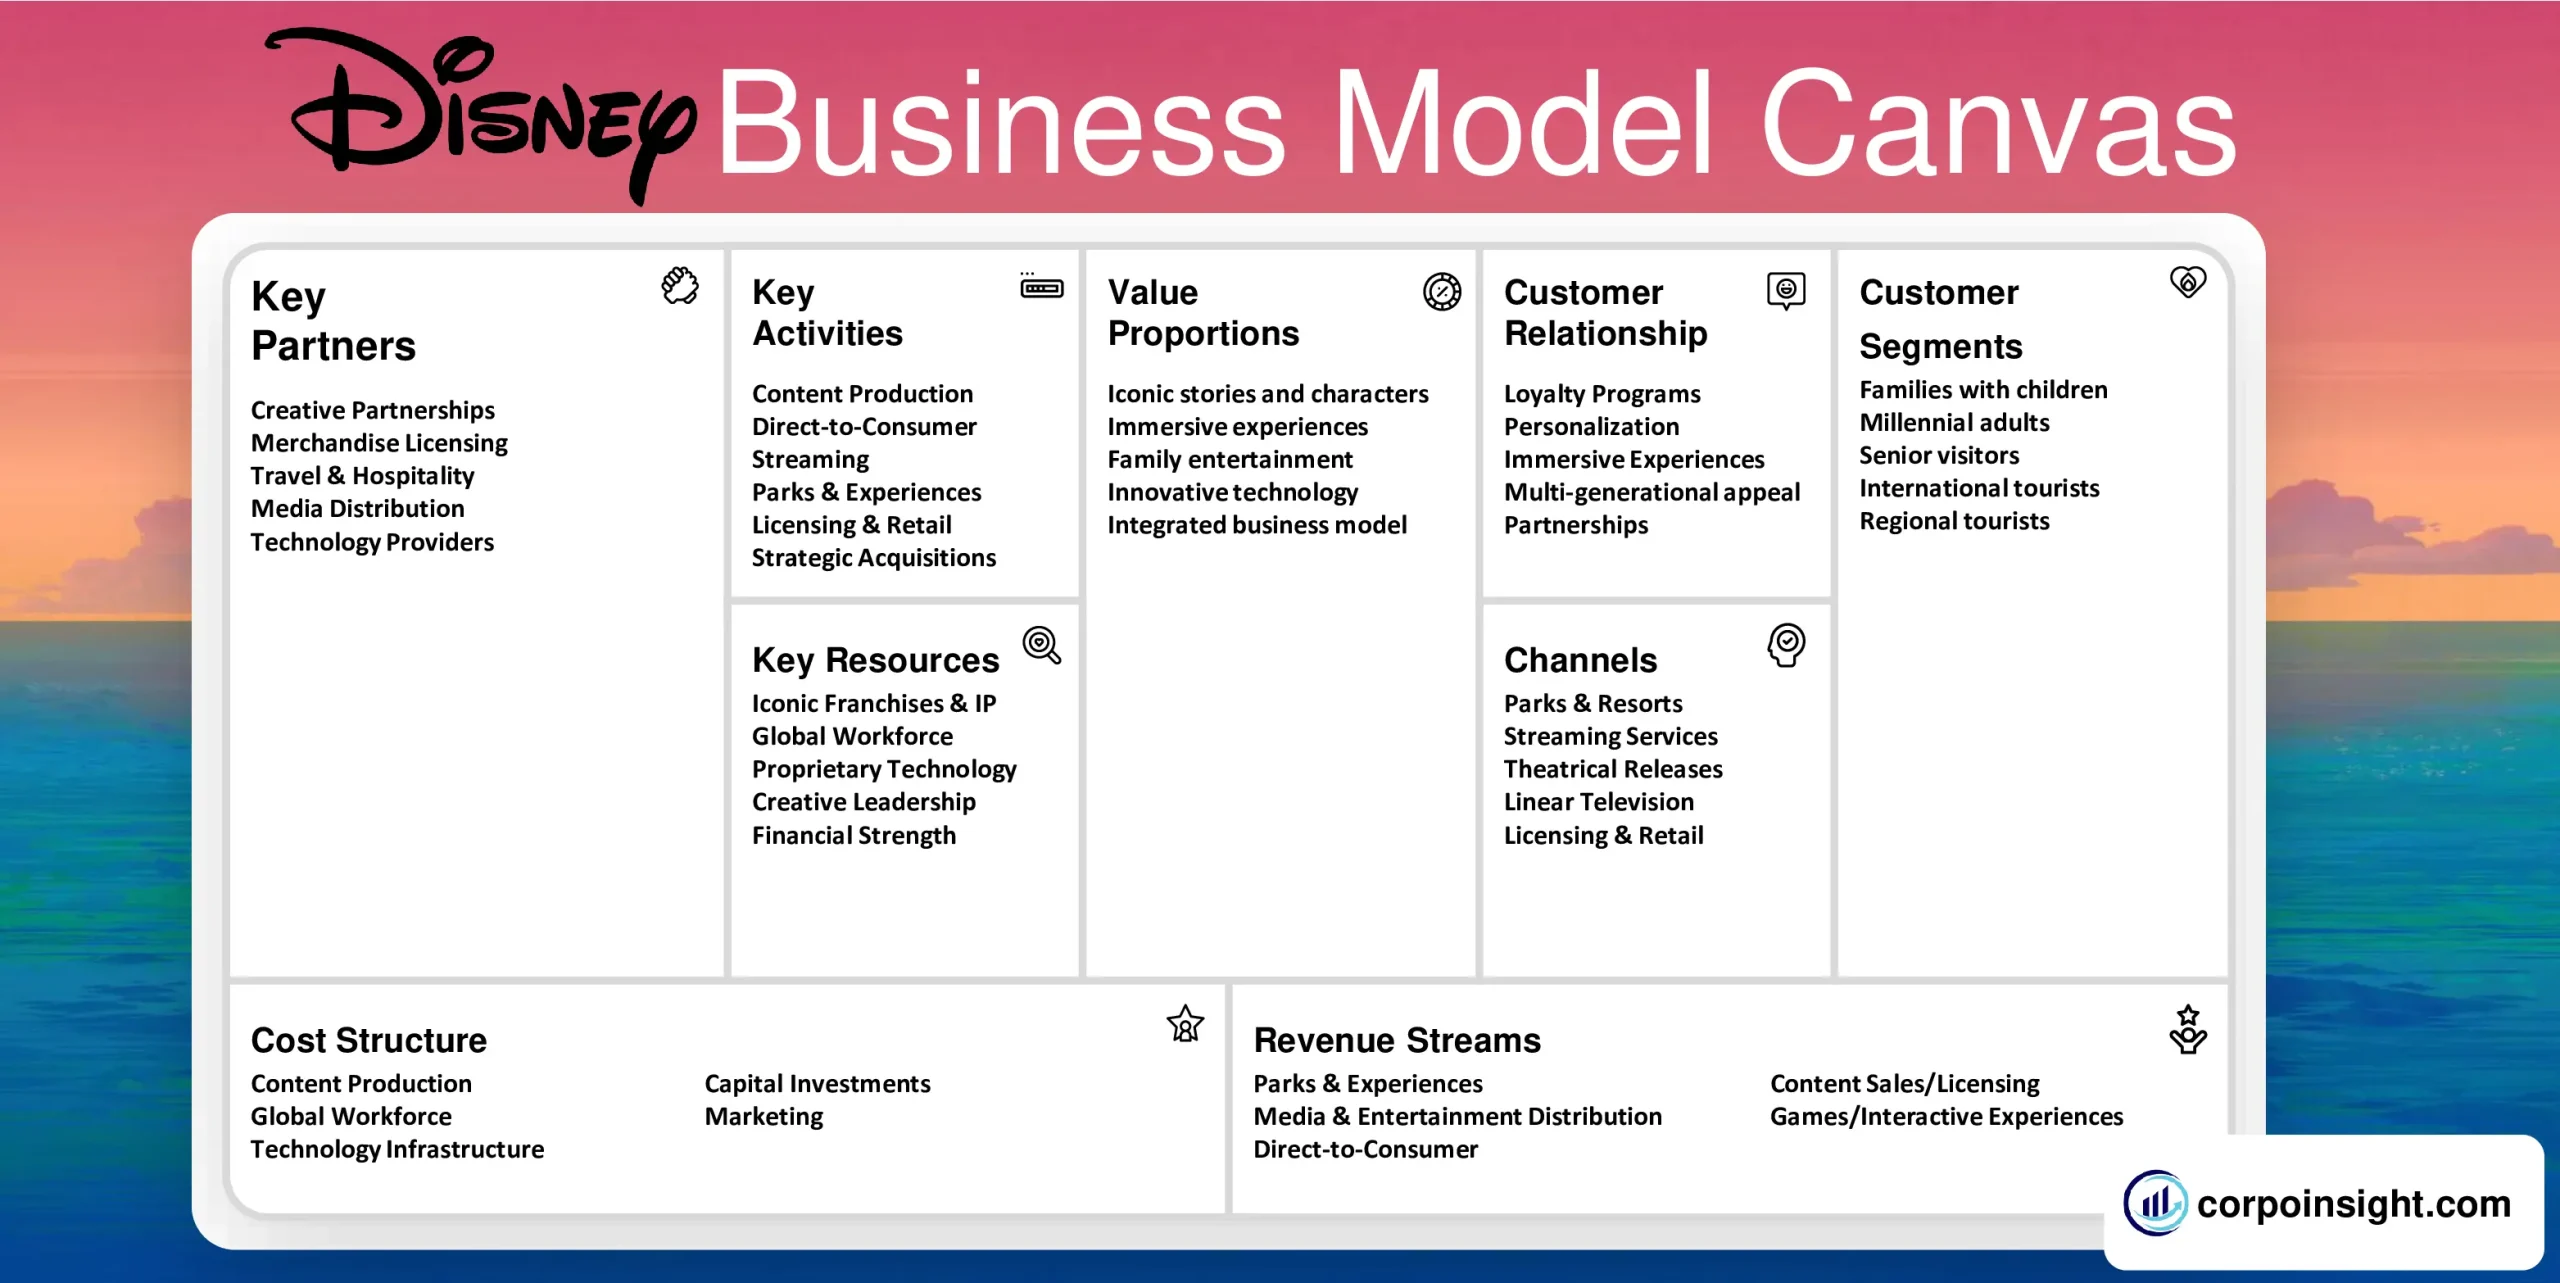 Summary of Disney Business Model Canvas